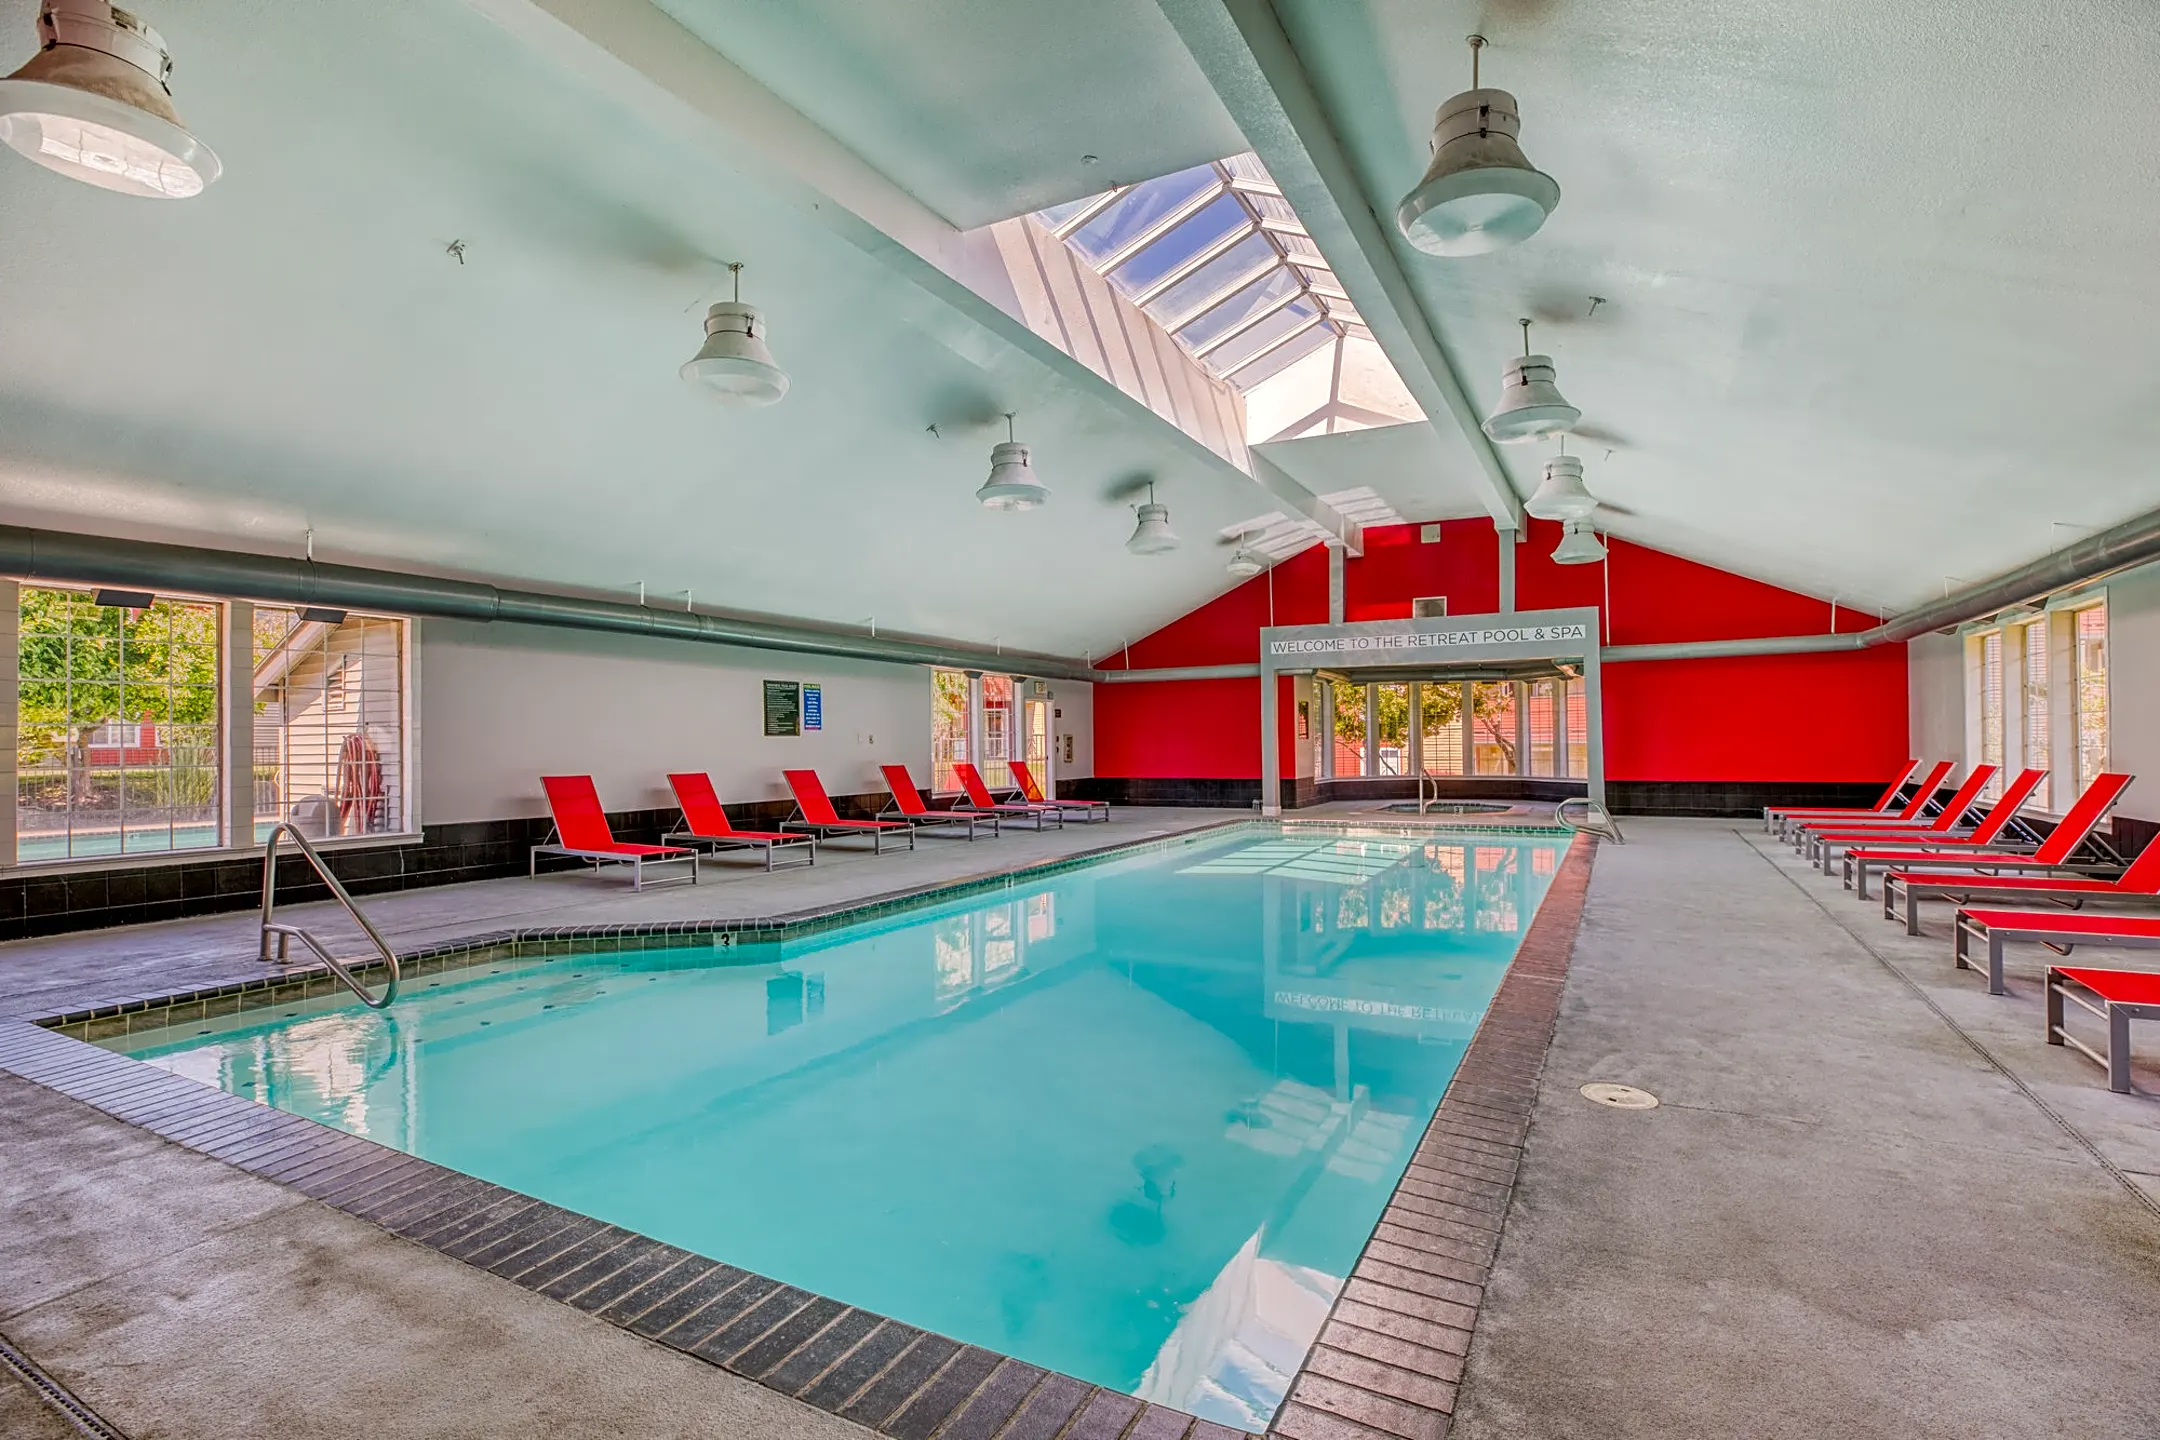 Pool - Pavilion Apartment Homes - Federal Way, WA